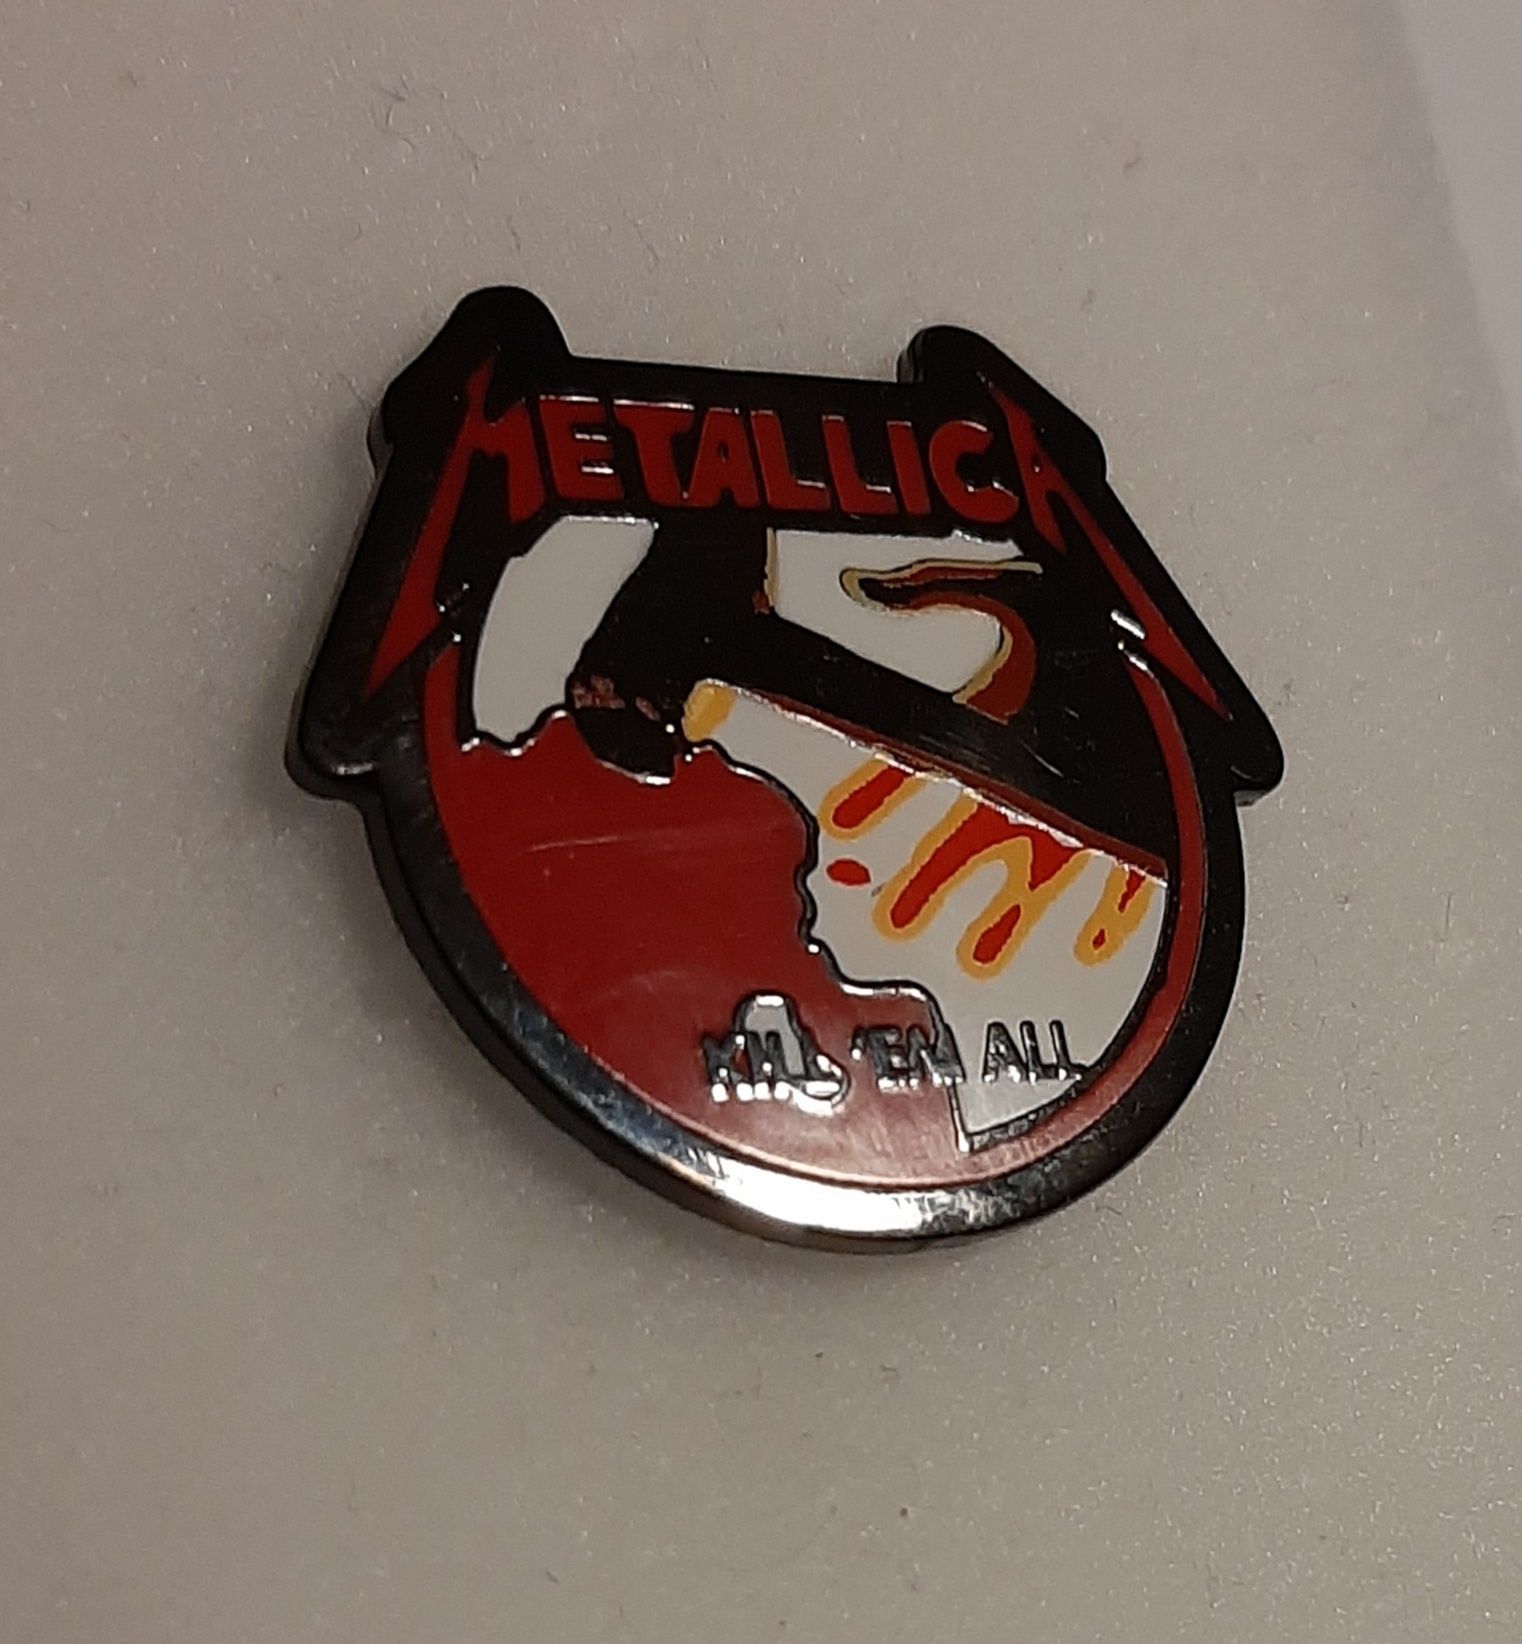 Przypinka - Metallica "killem all"